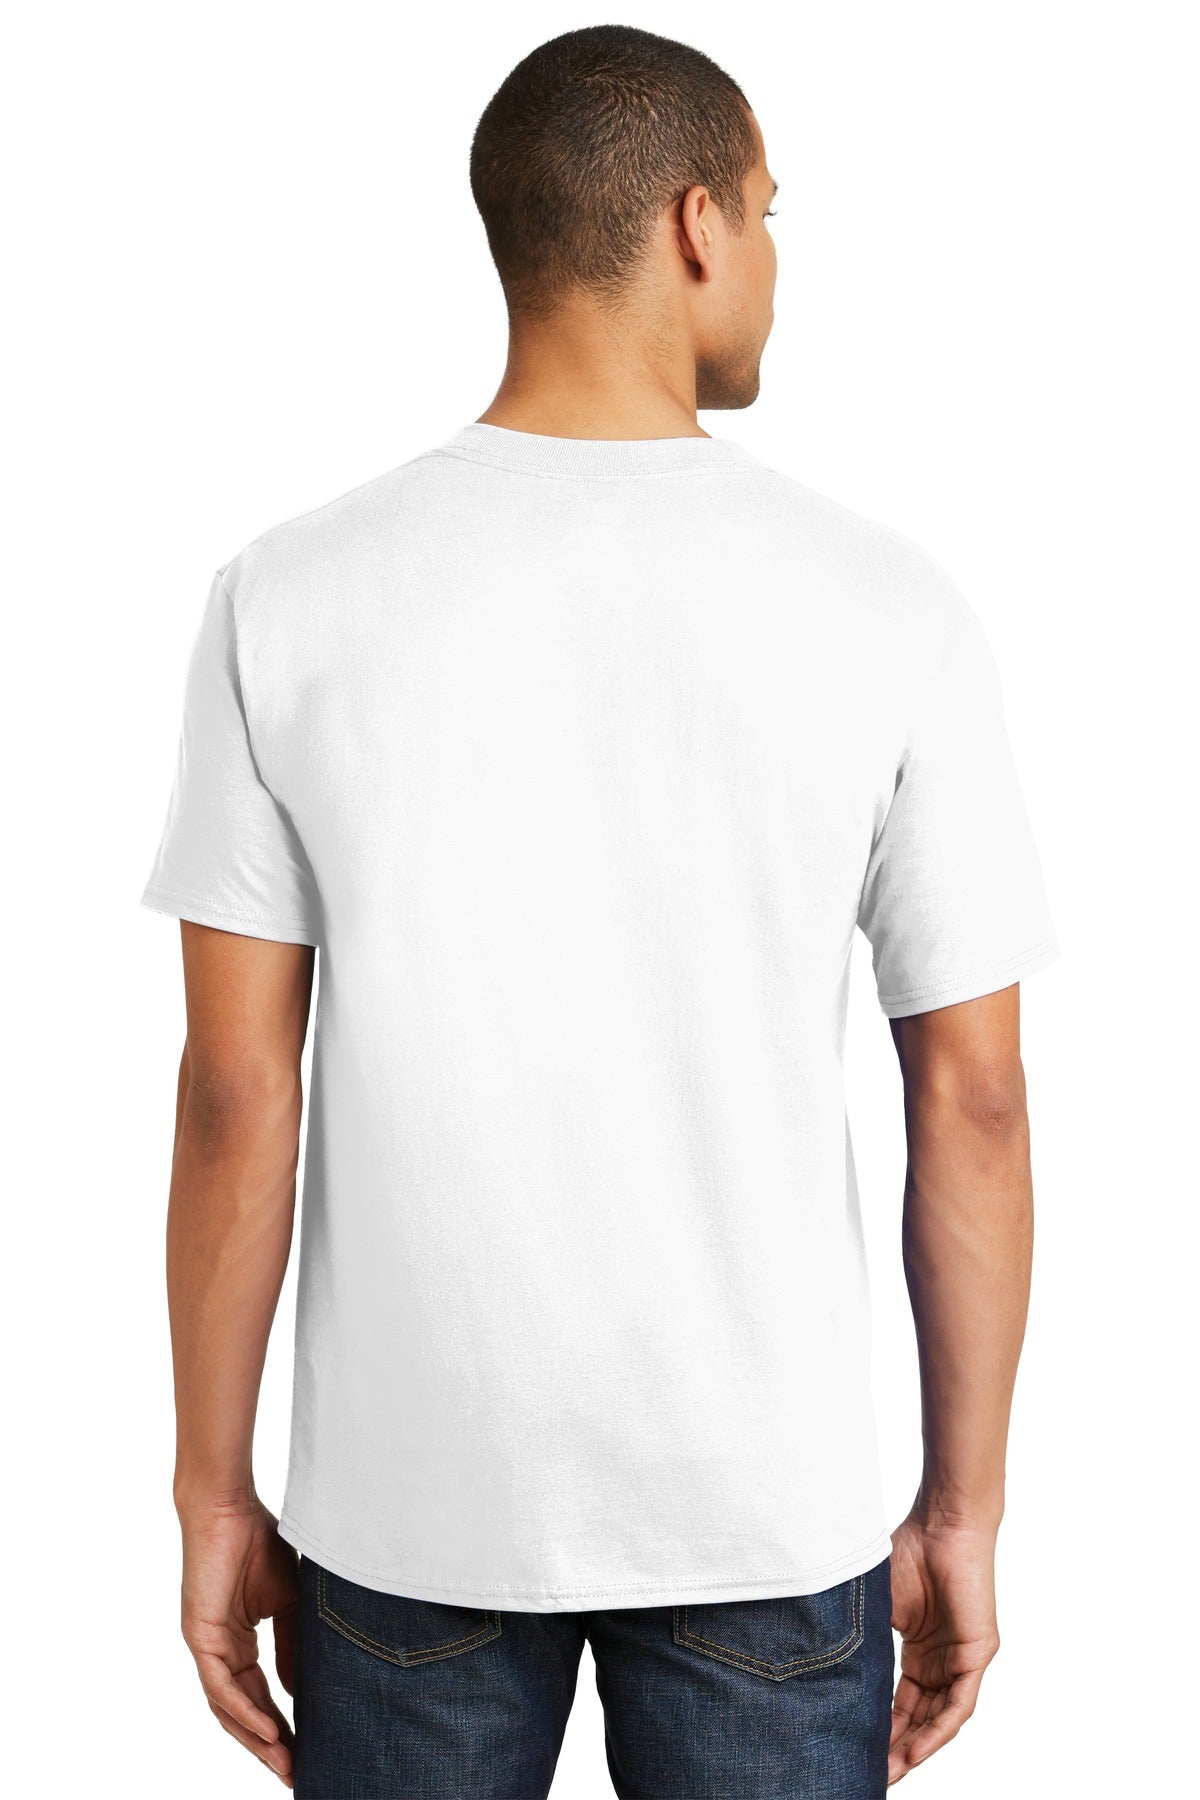 Hanes® Beefy-T® - 100% Cotton T-Shirt. 5180 [White] - DFW Impression